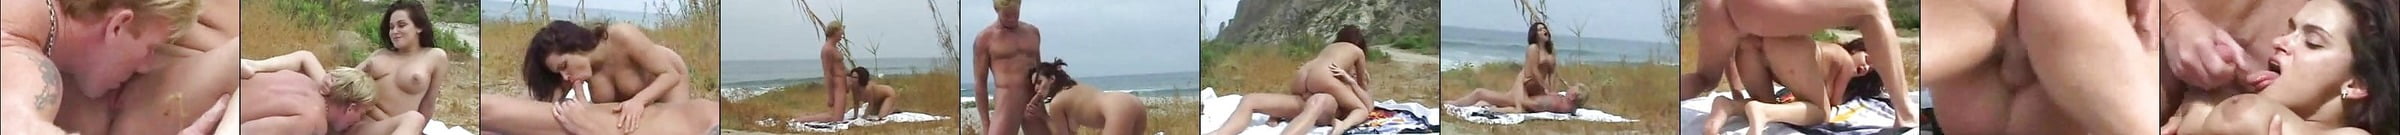 Beach Sex Videos Outdoor Nude Voyeur Porn Xhamster